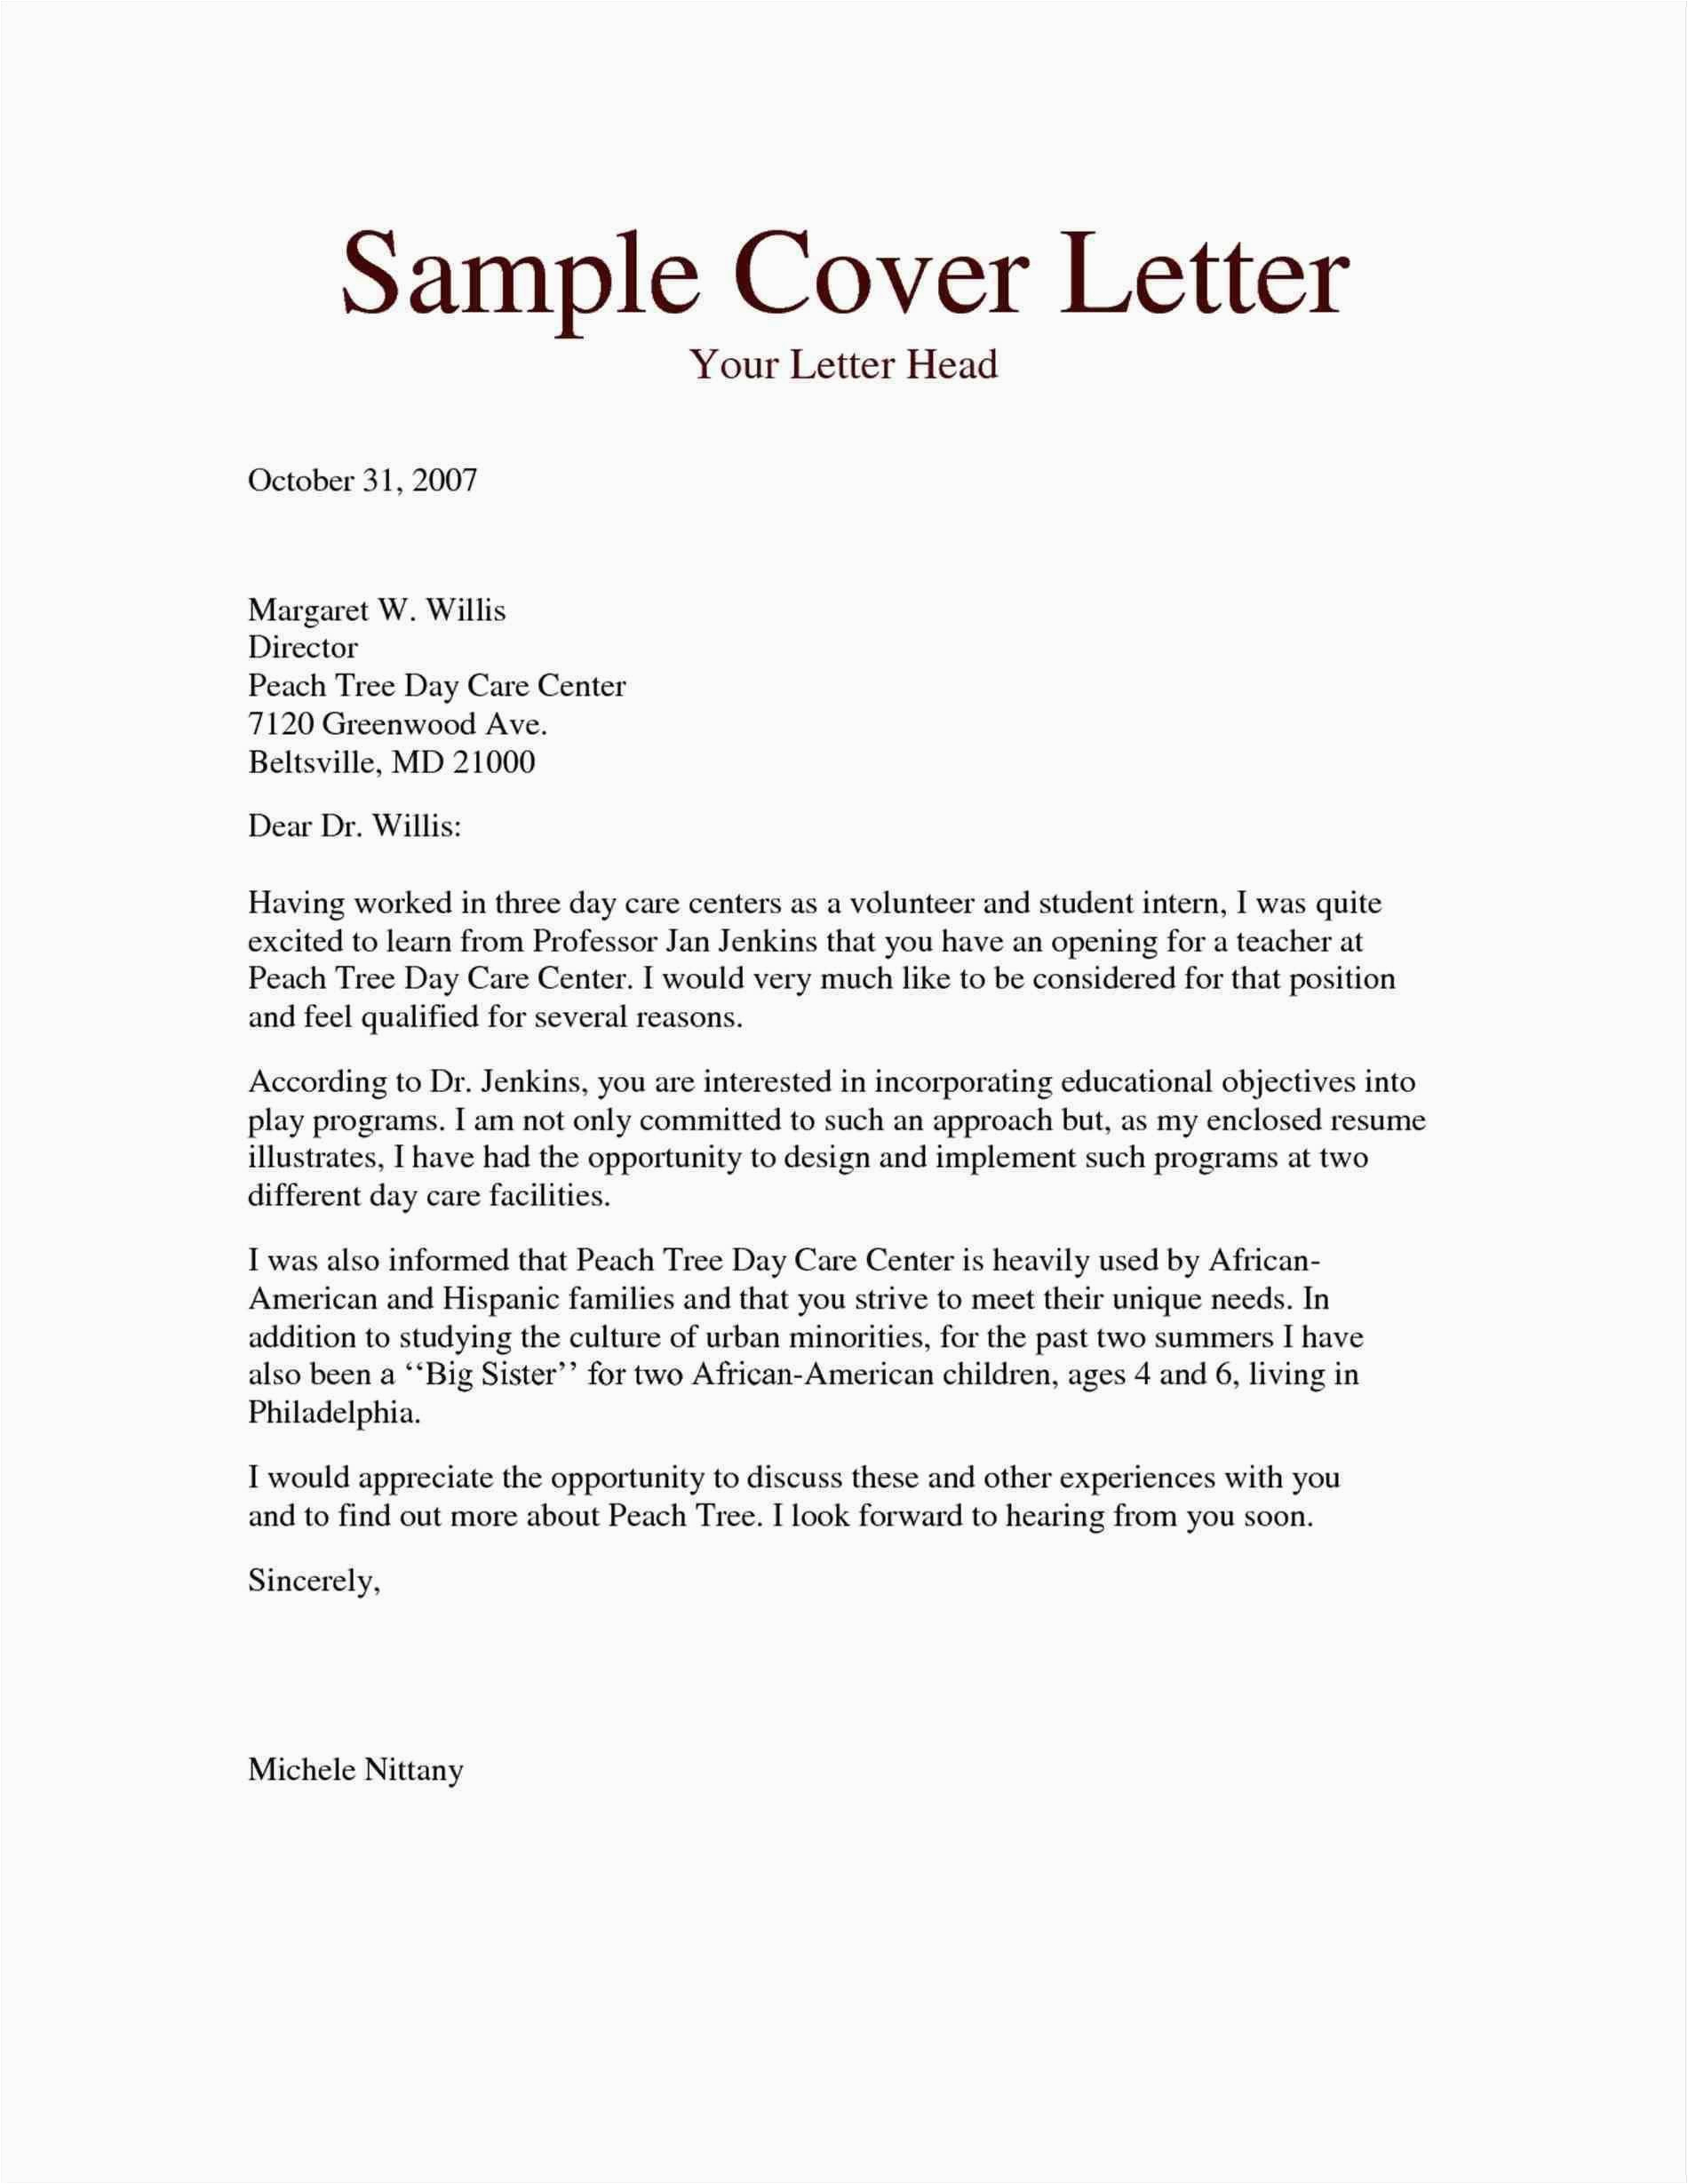 Resume Cover Letter Samples for First Job 25 Free Cover Letter Samples